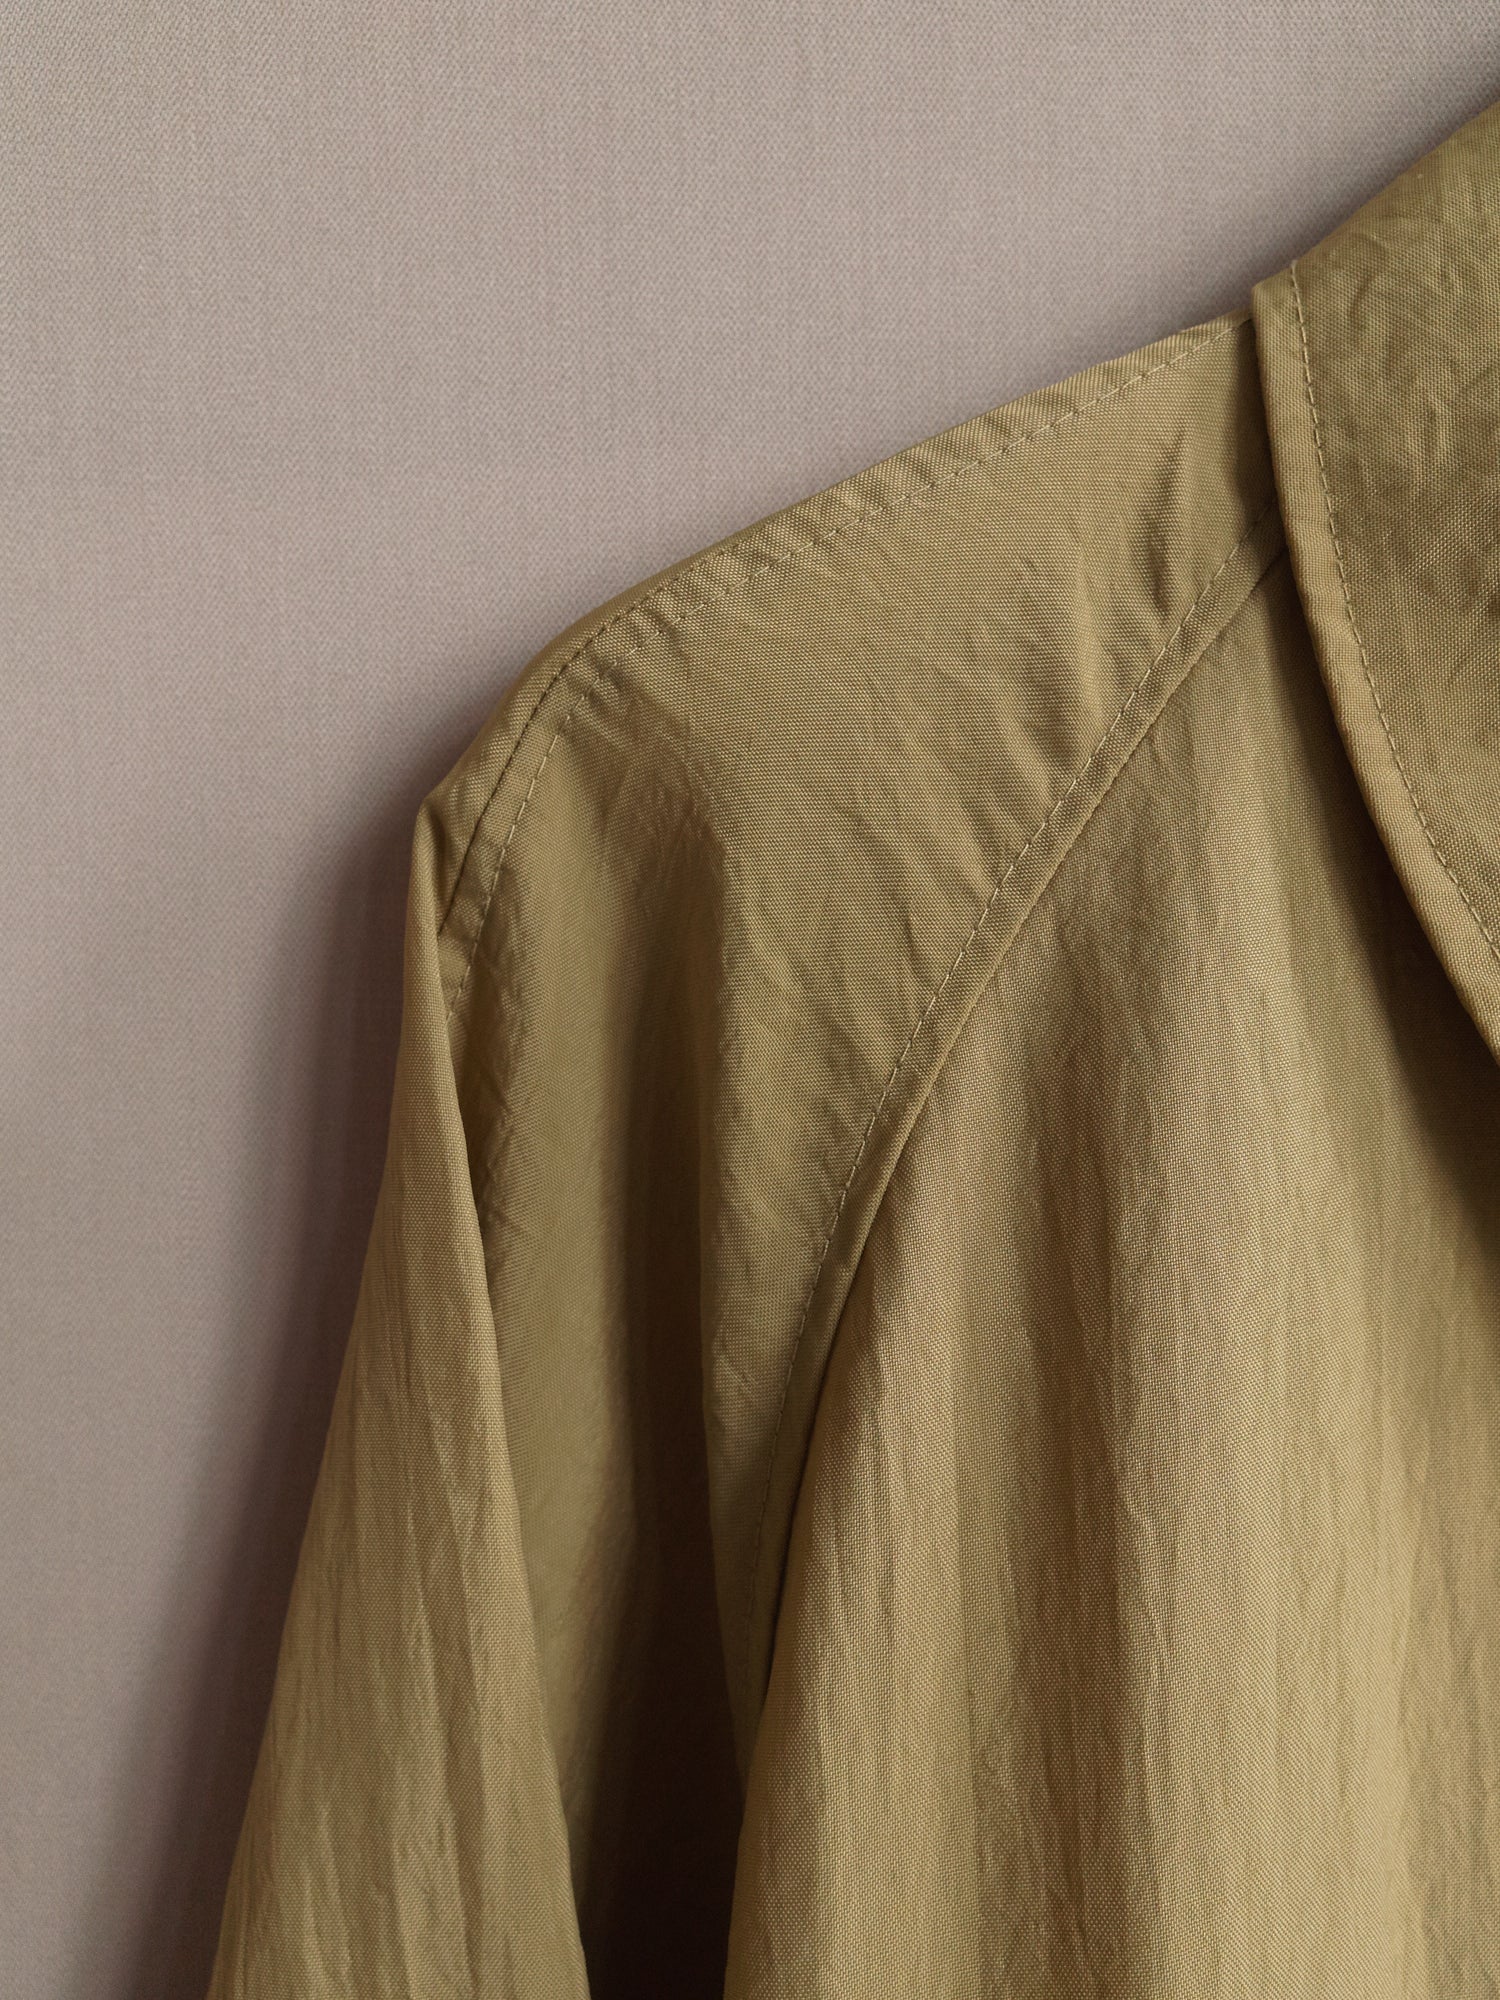 vintage 1990s khaki creased nylon covered placket mackintosh coat - womens M L S